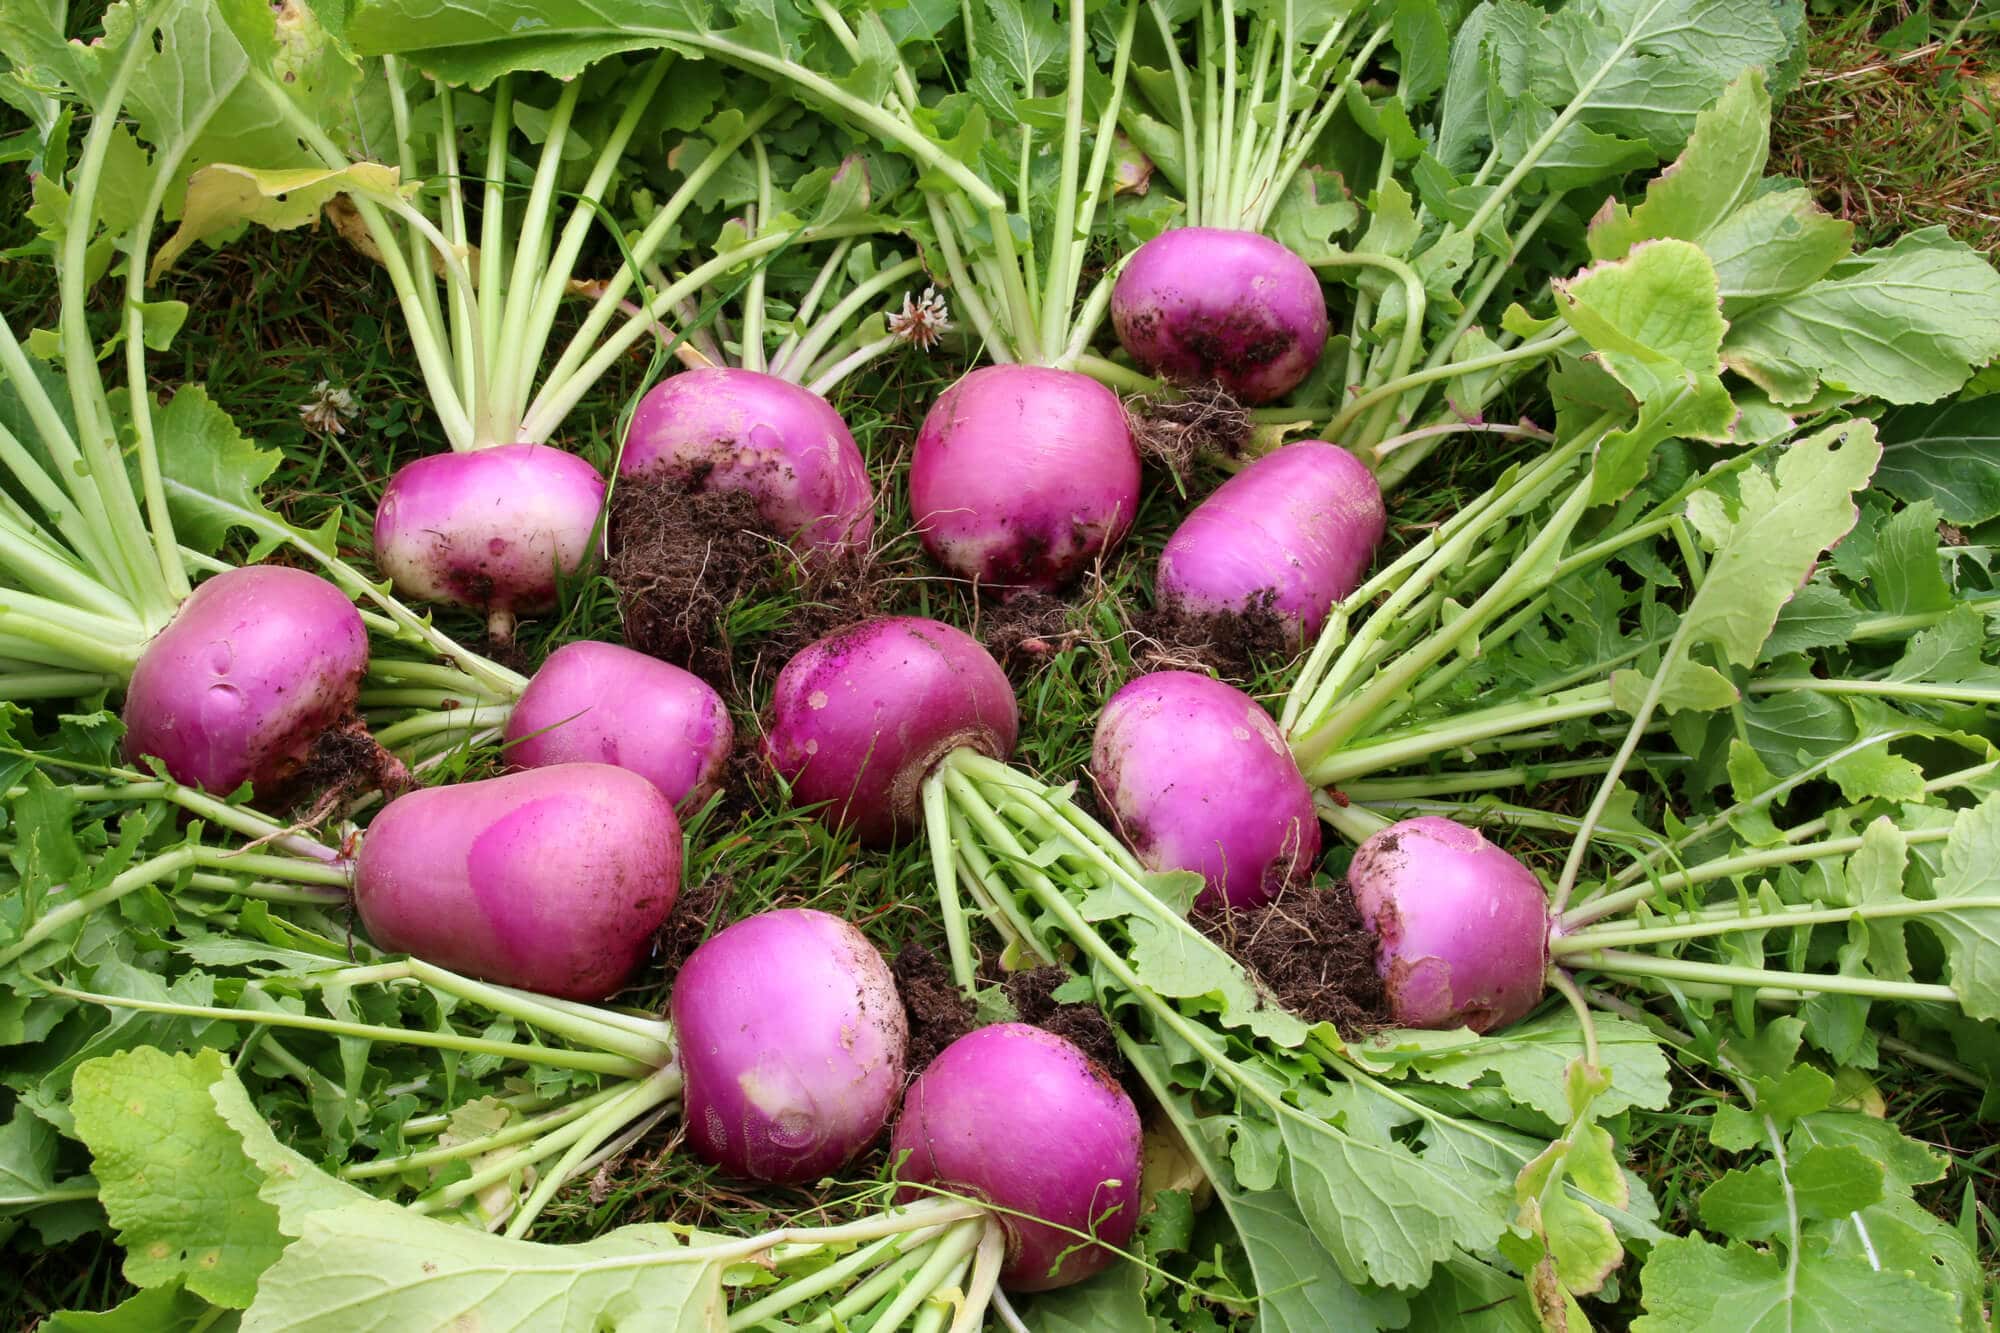 Pickled-Turnips-6